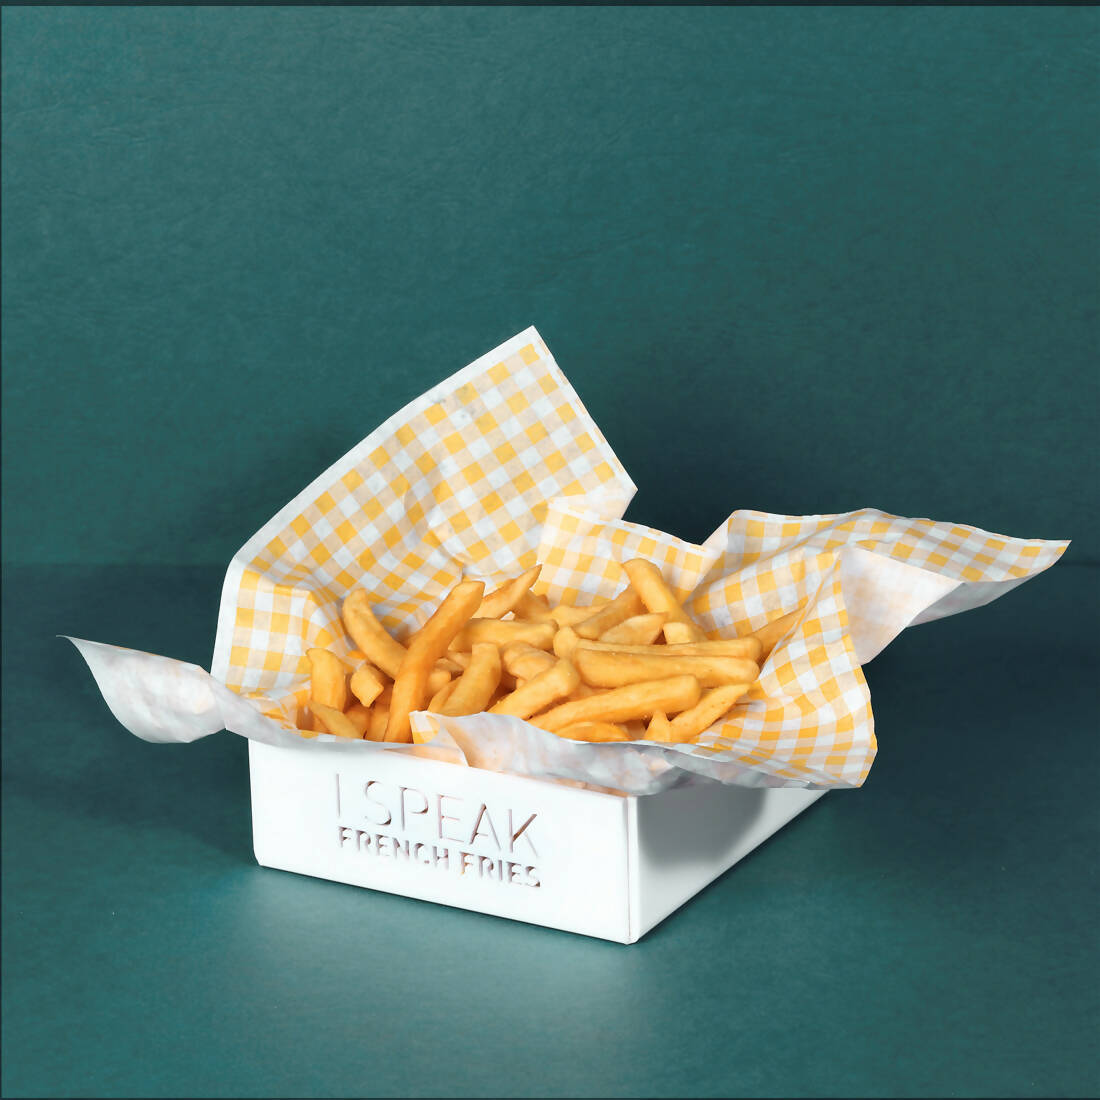 Custom-made french fries box design.